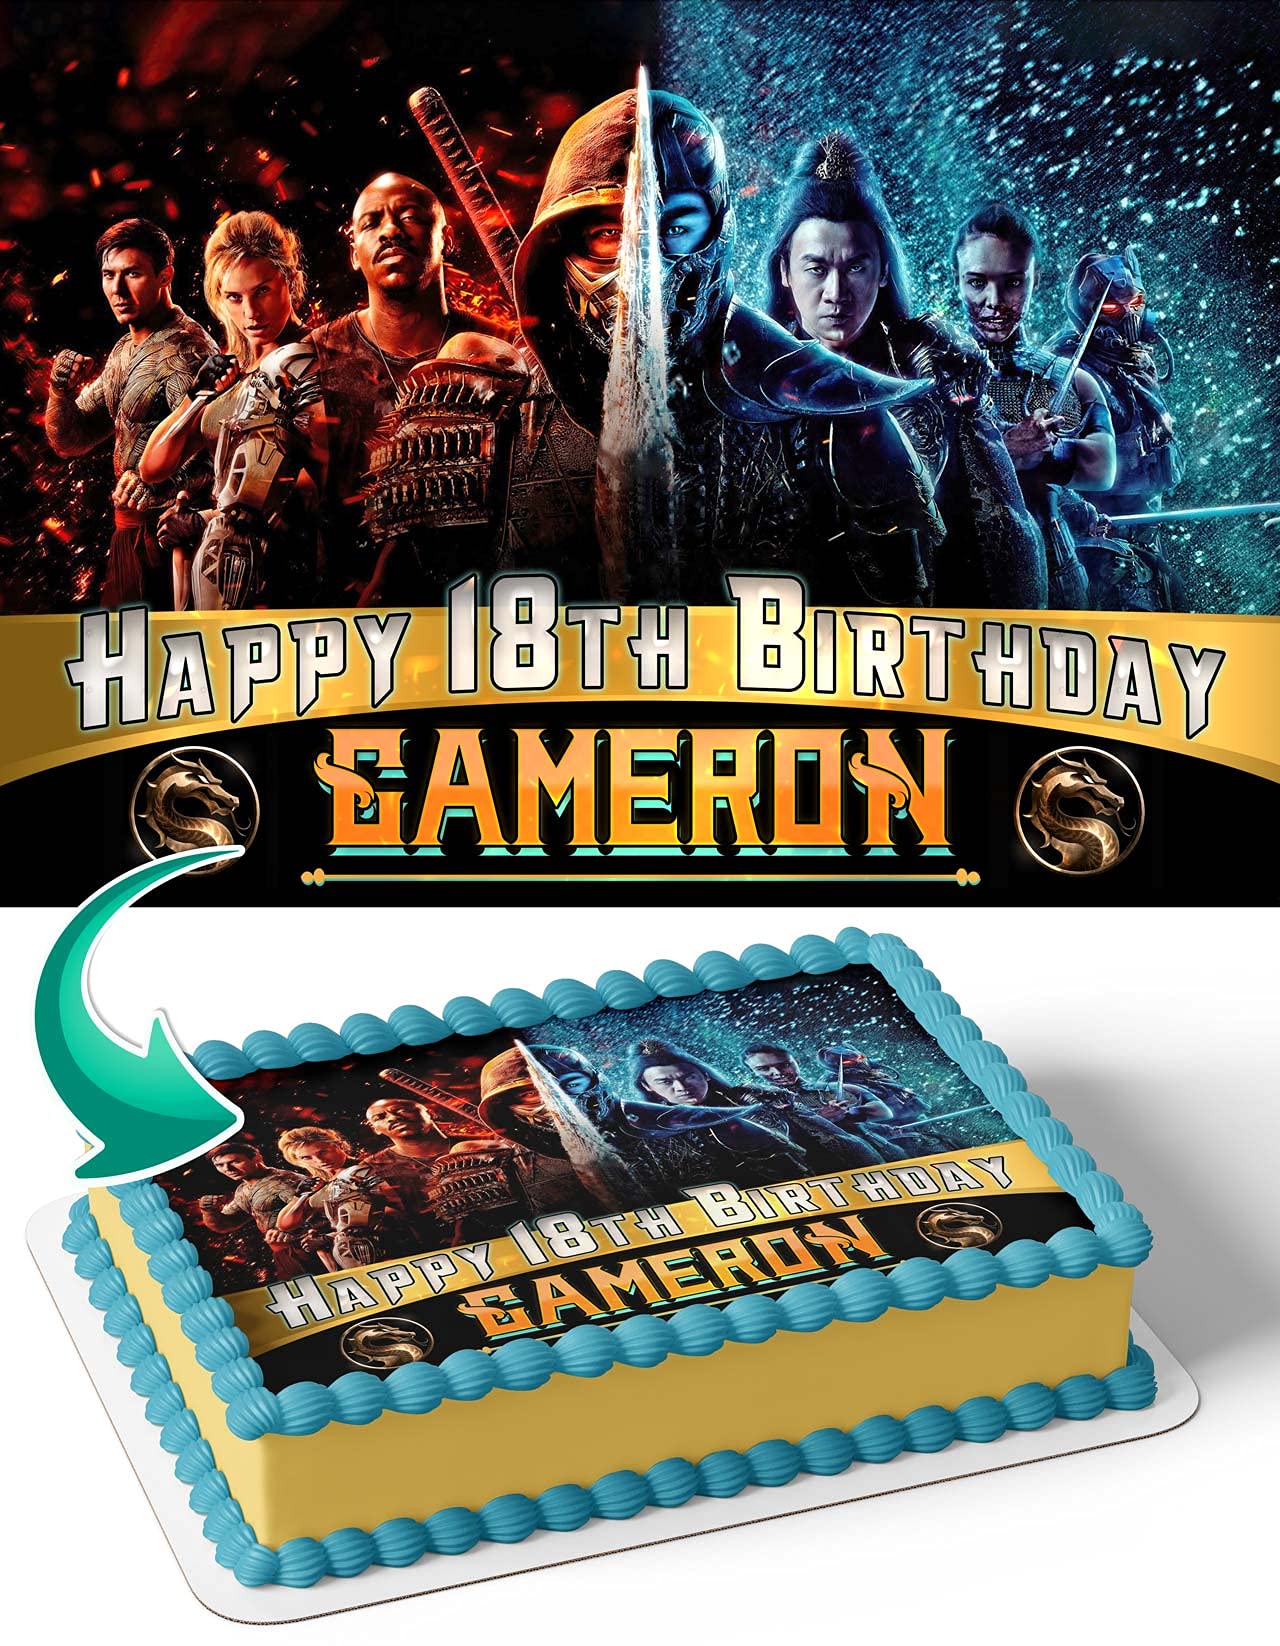 The Birthday Cake Movie 2021 Wallpapers